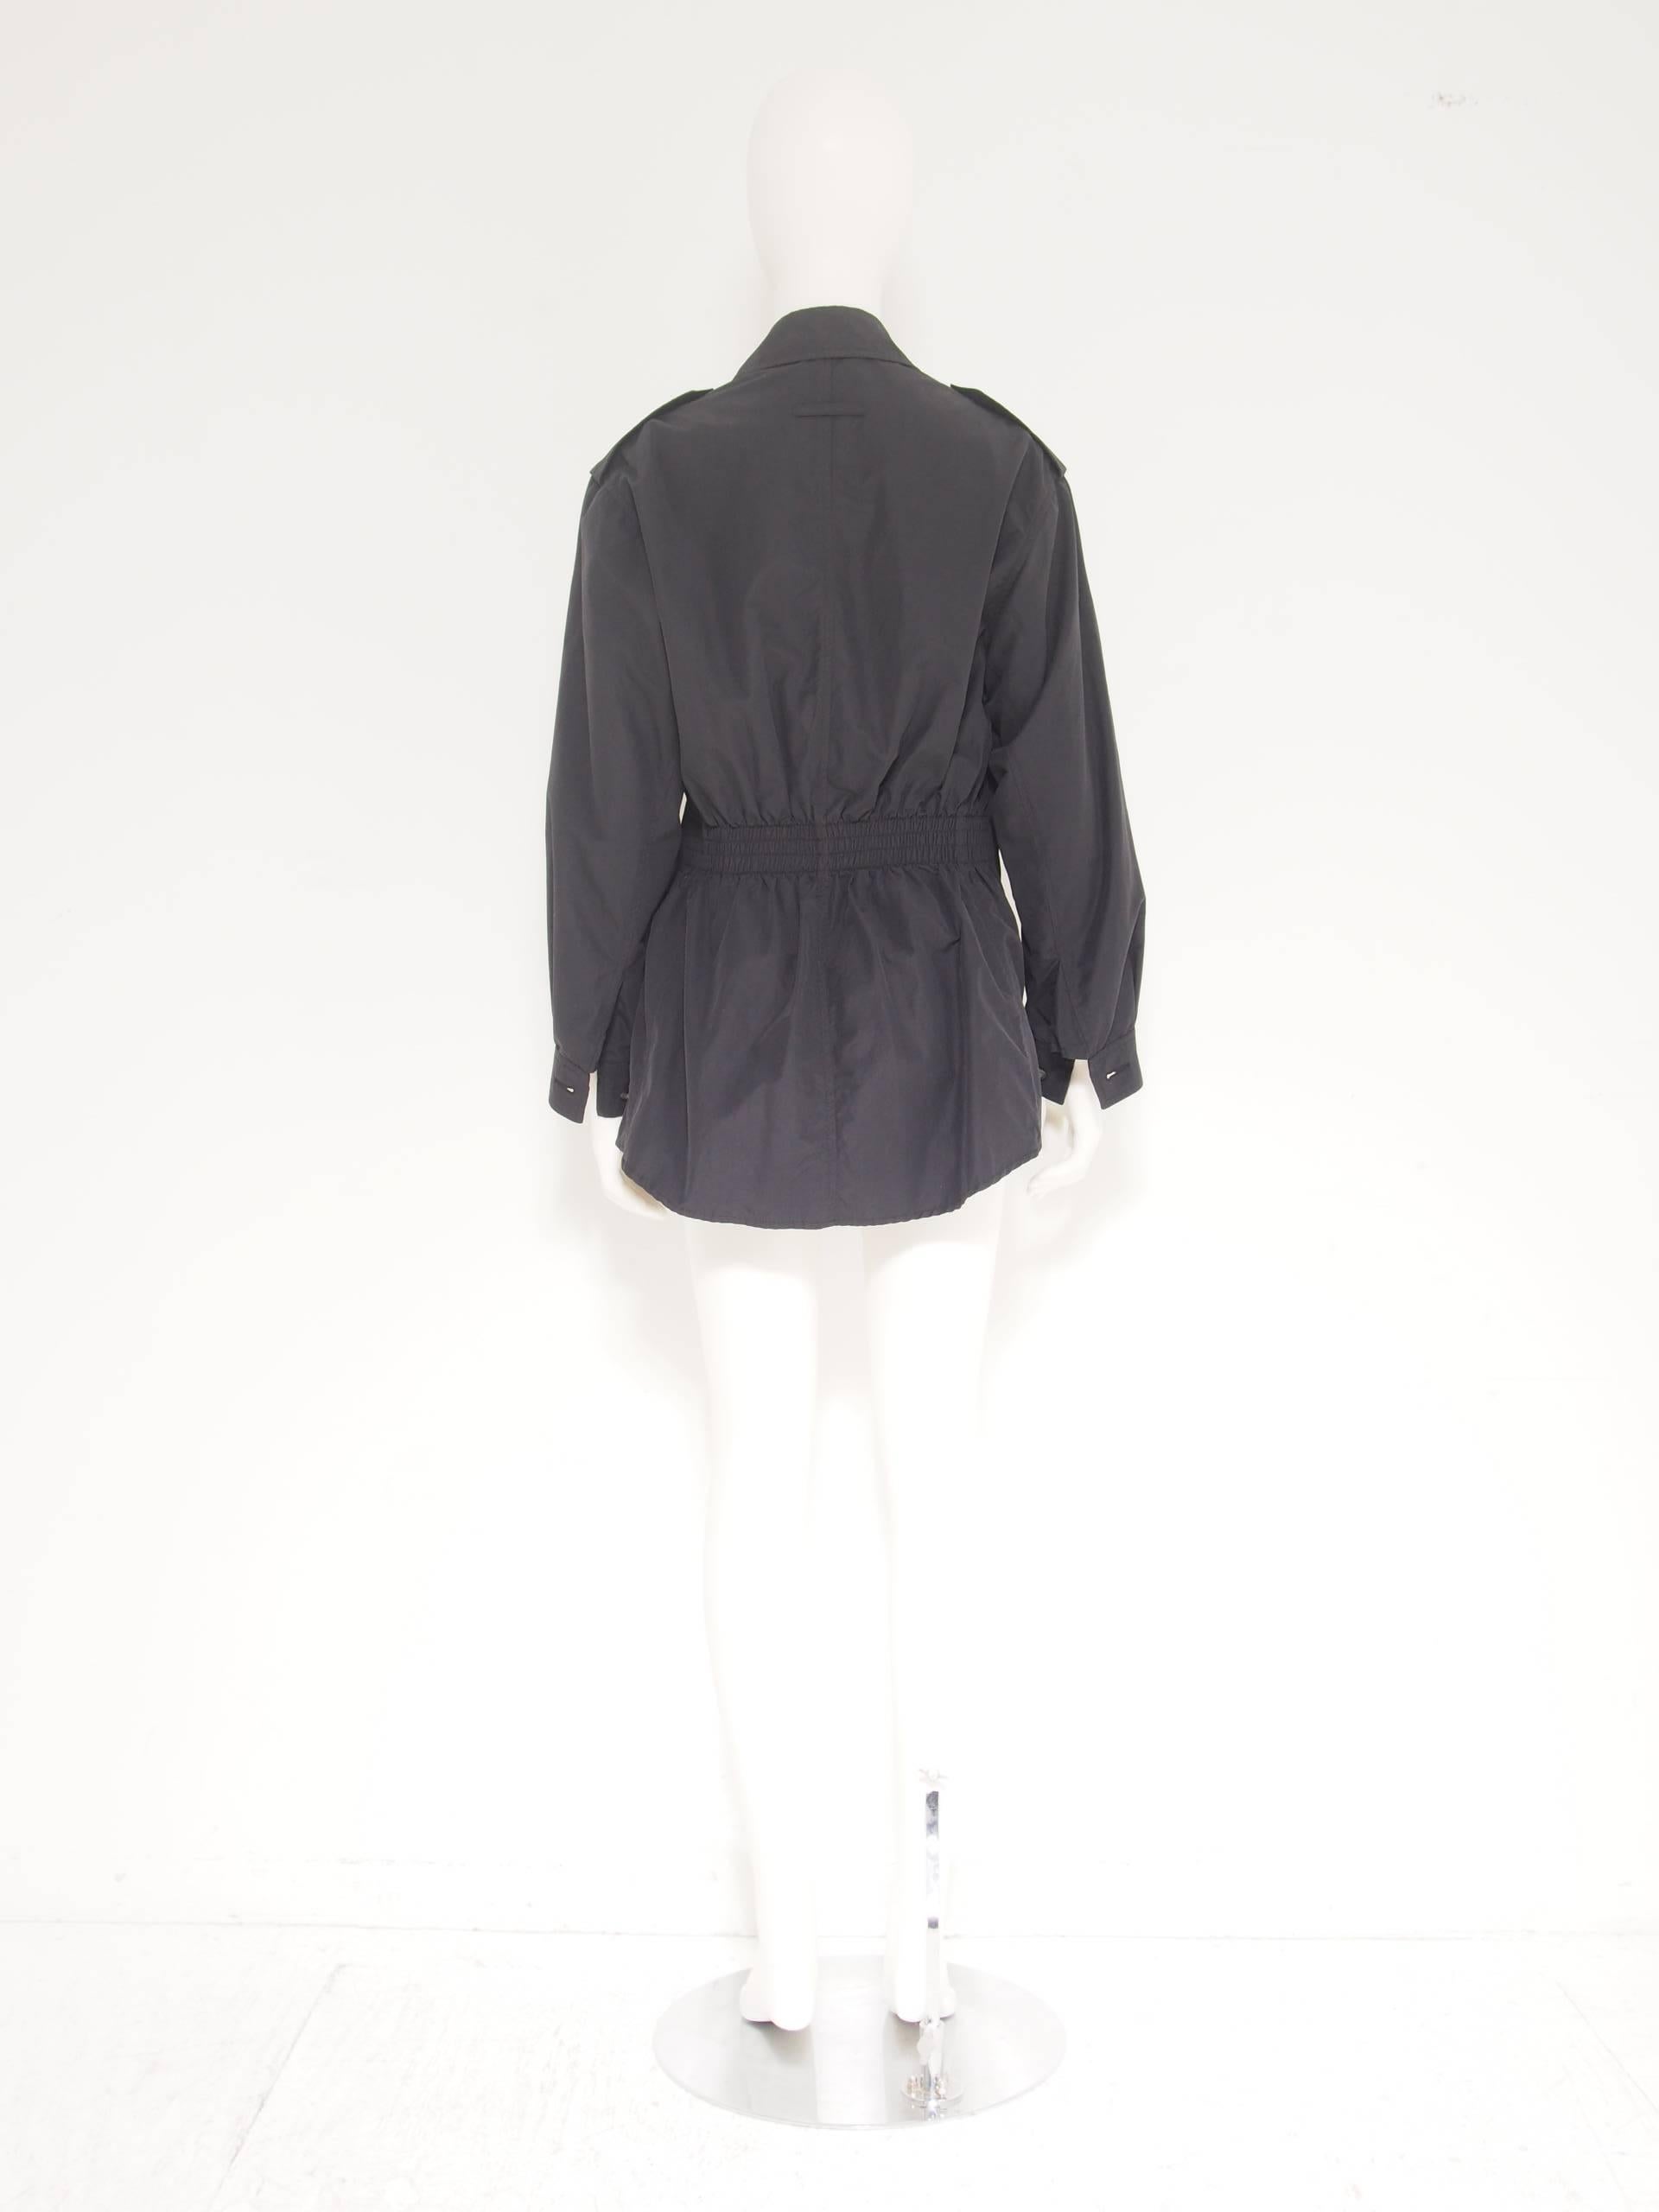 Jean Paul Gaultier Navy nautical anorak jacket with zipper closure and belted waistline.